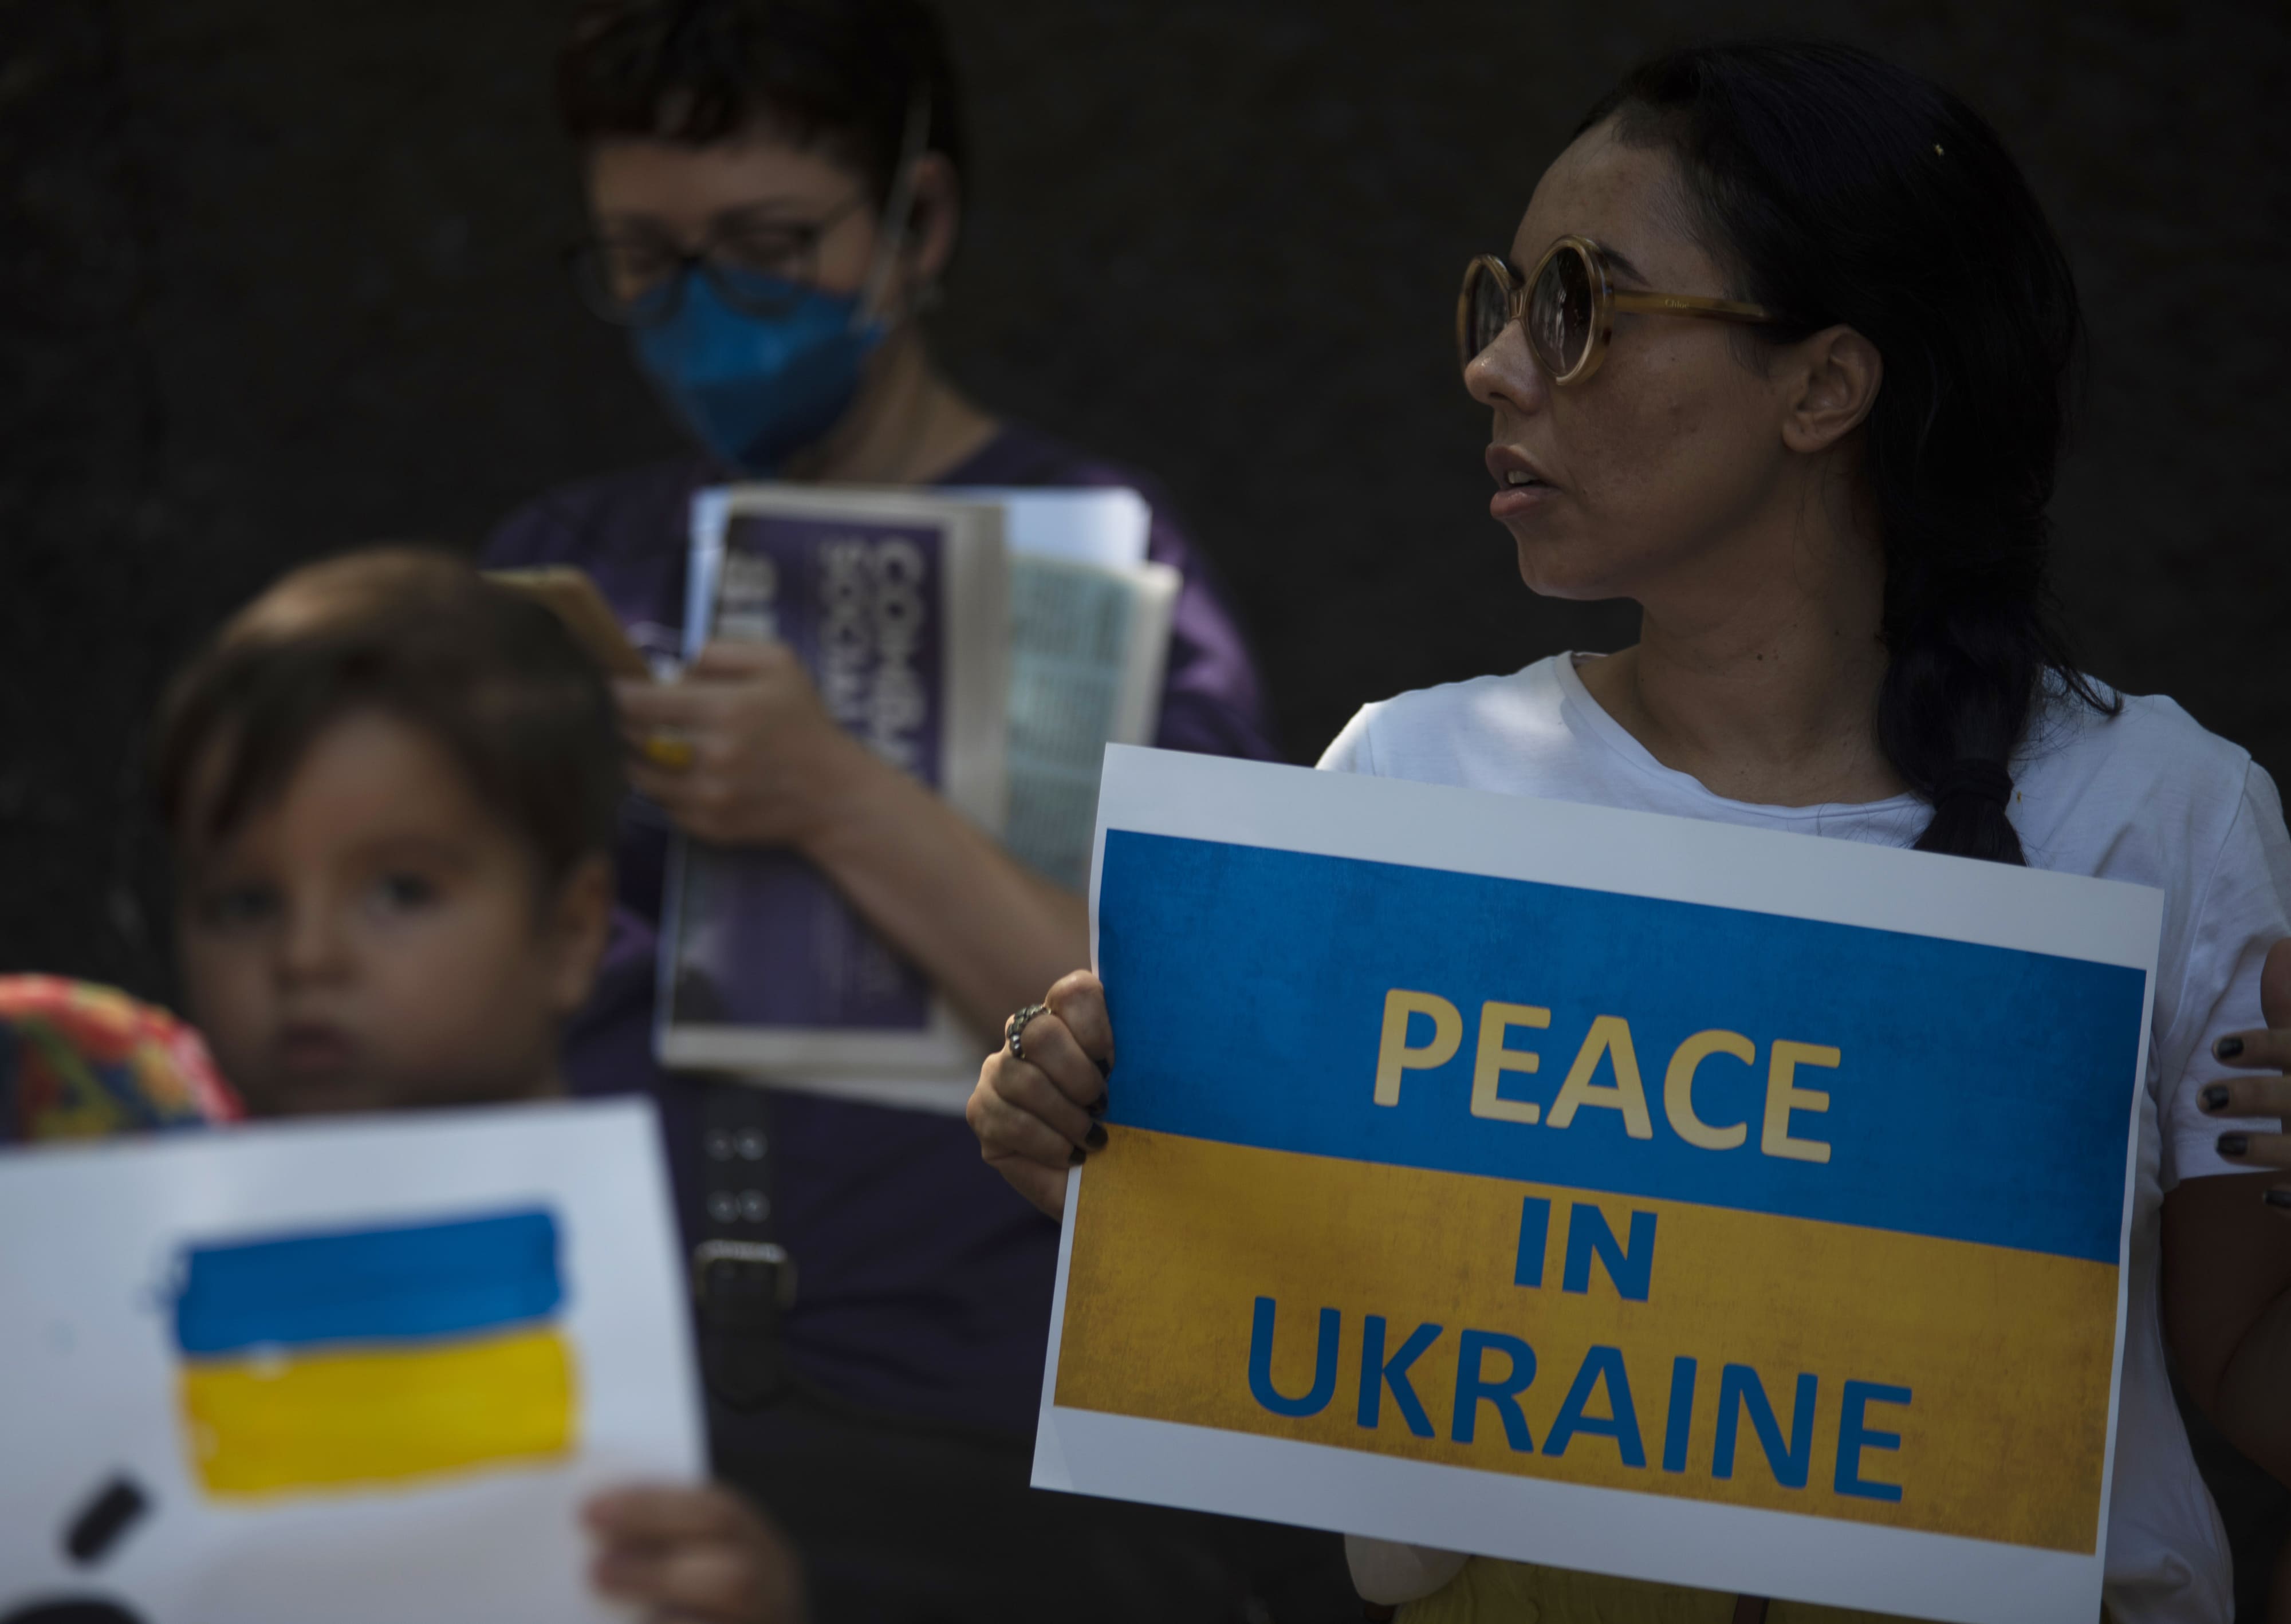 European Union welcomes Ukrainian refugees